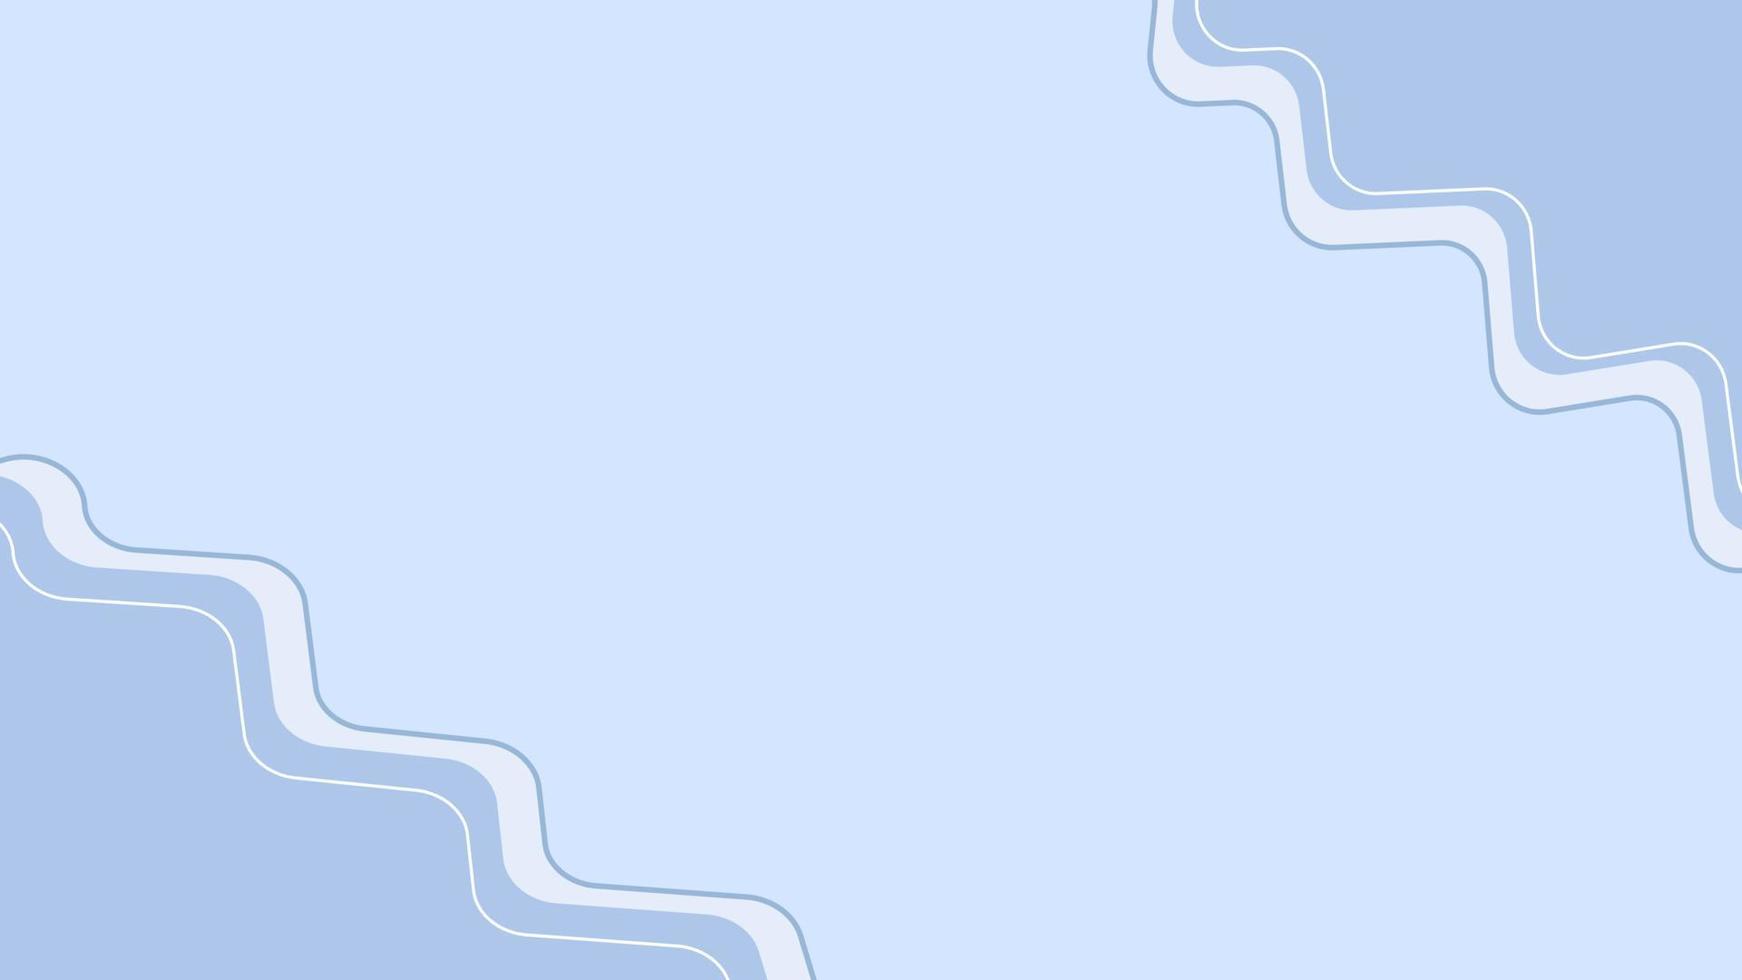 Ilustración de fondo de pantalla mínimo abstracto azul pastel lindo  estético, perfecto para papel tapiz, telón de fondo, postal, fondo y  pancarta 11113829 Vector en Vecteezy